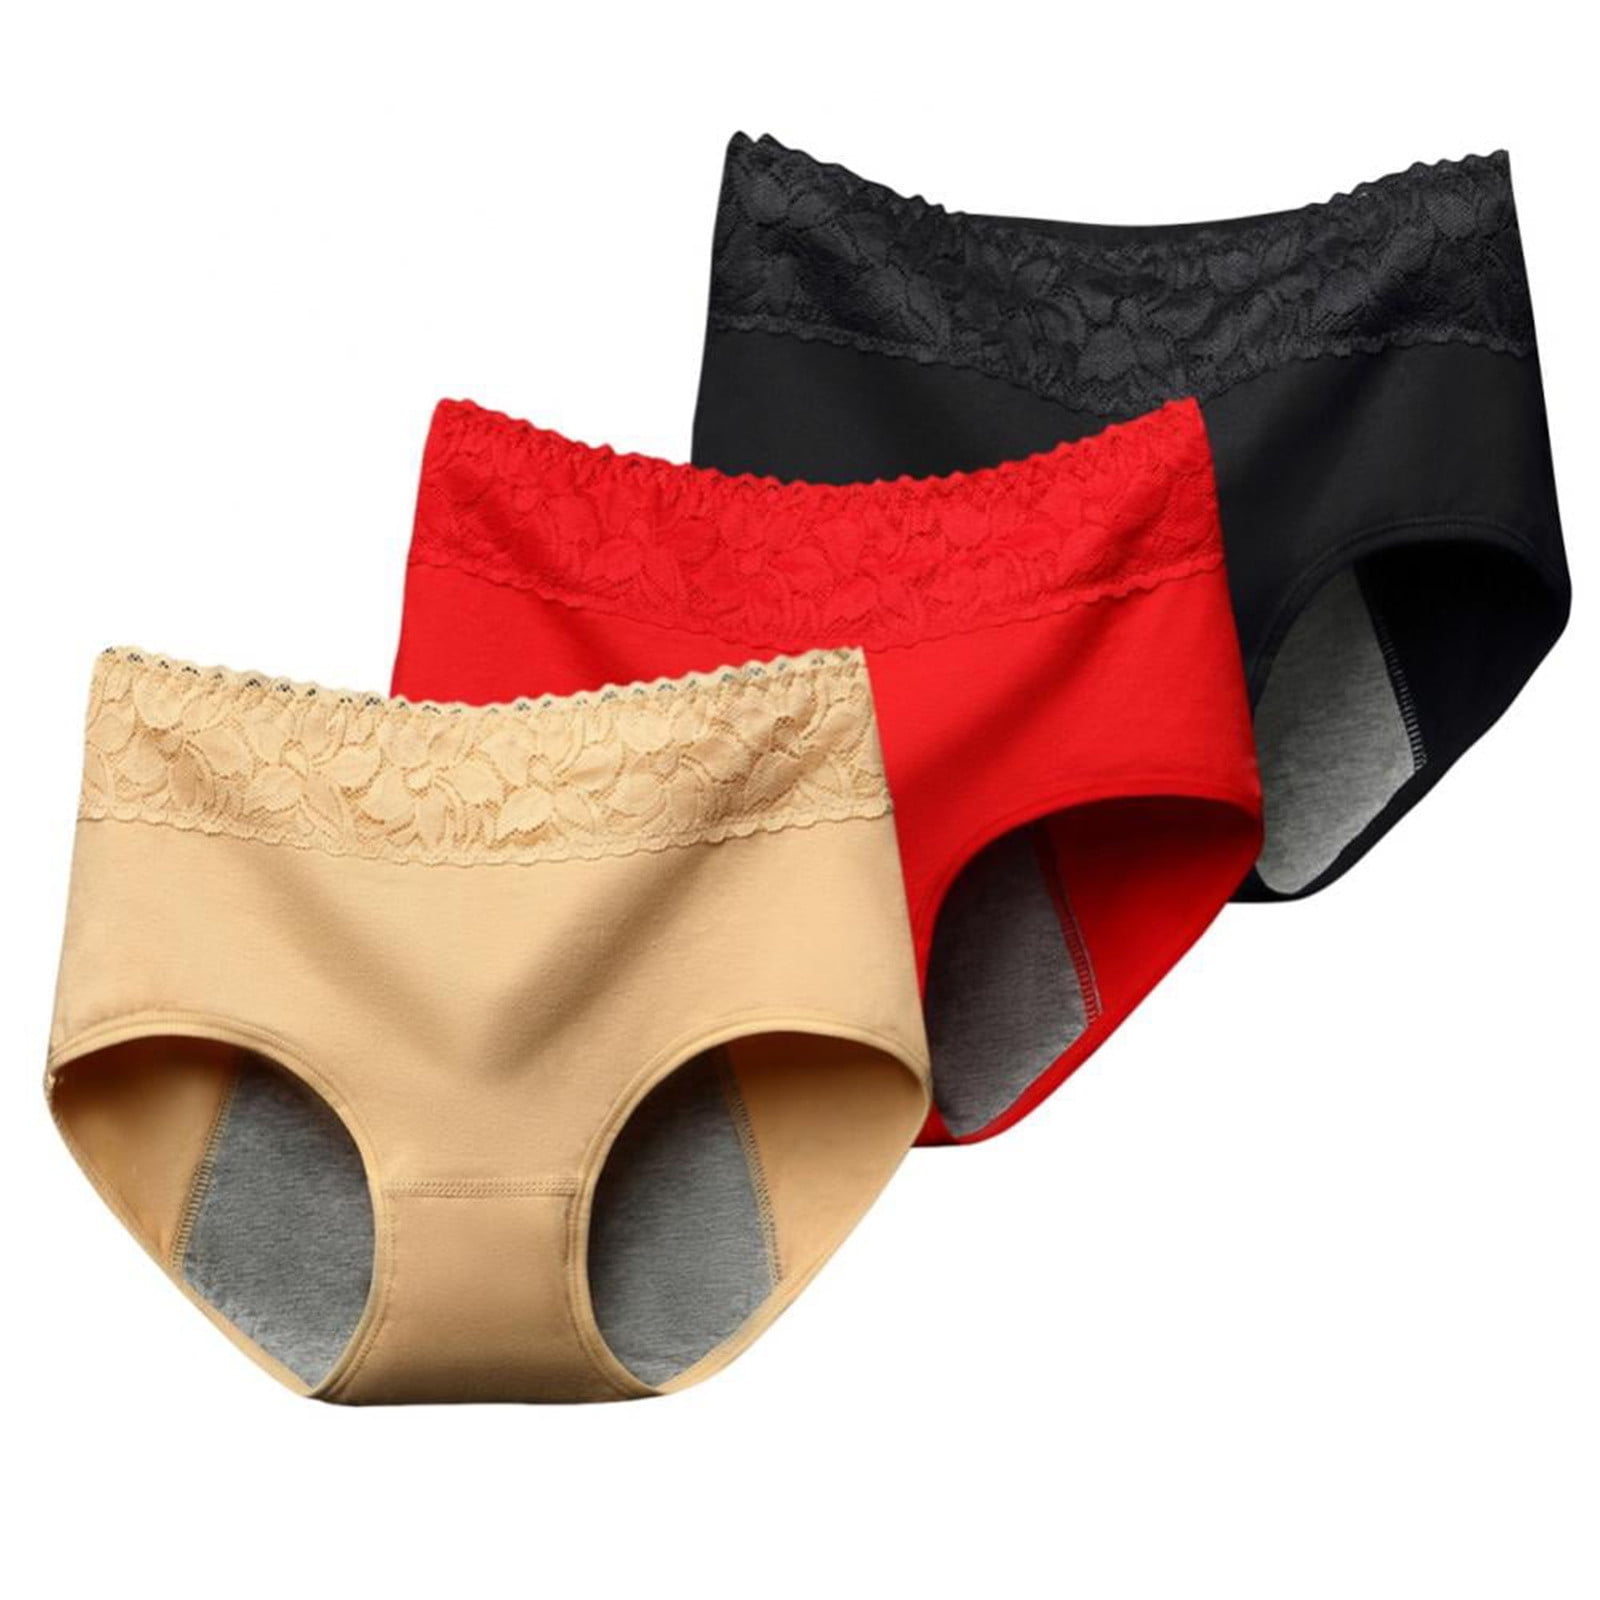 Knosfe Panties for Women No Show Leak Proof Menstrual Period